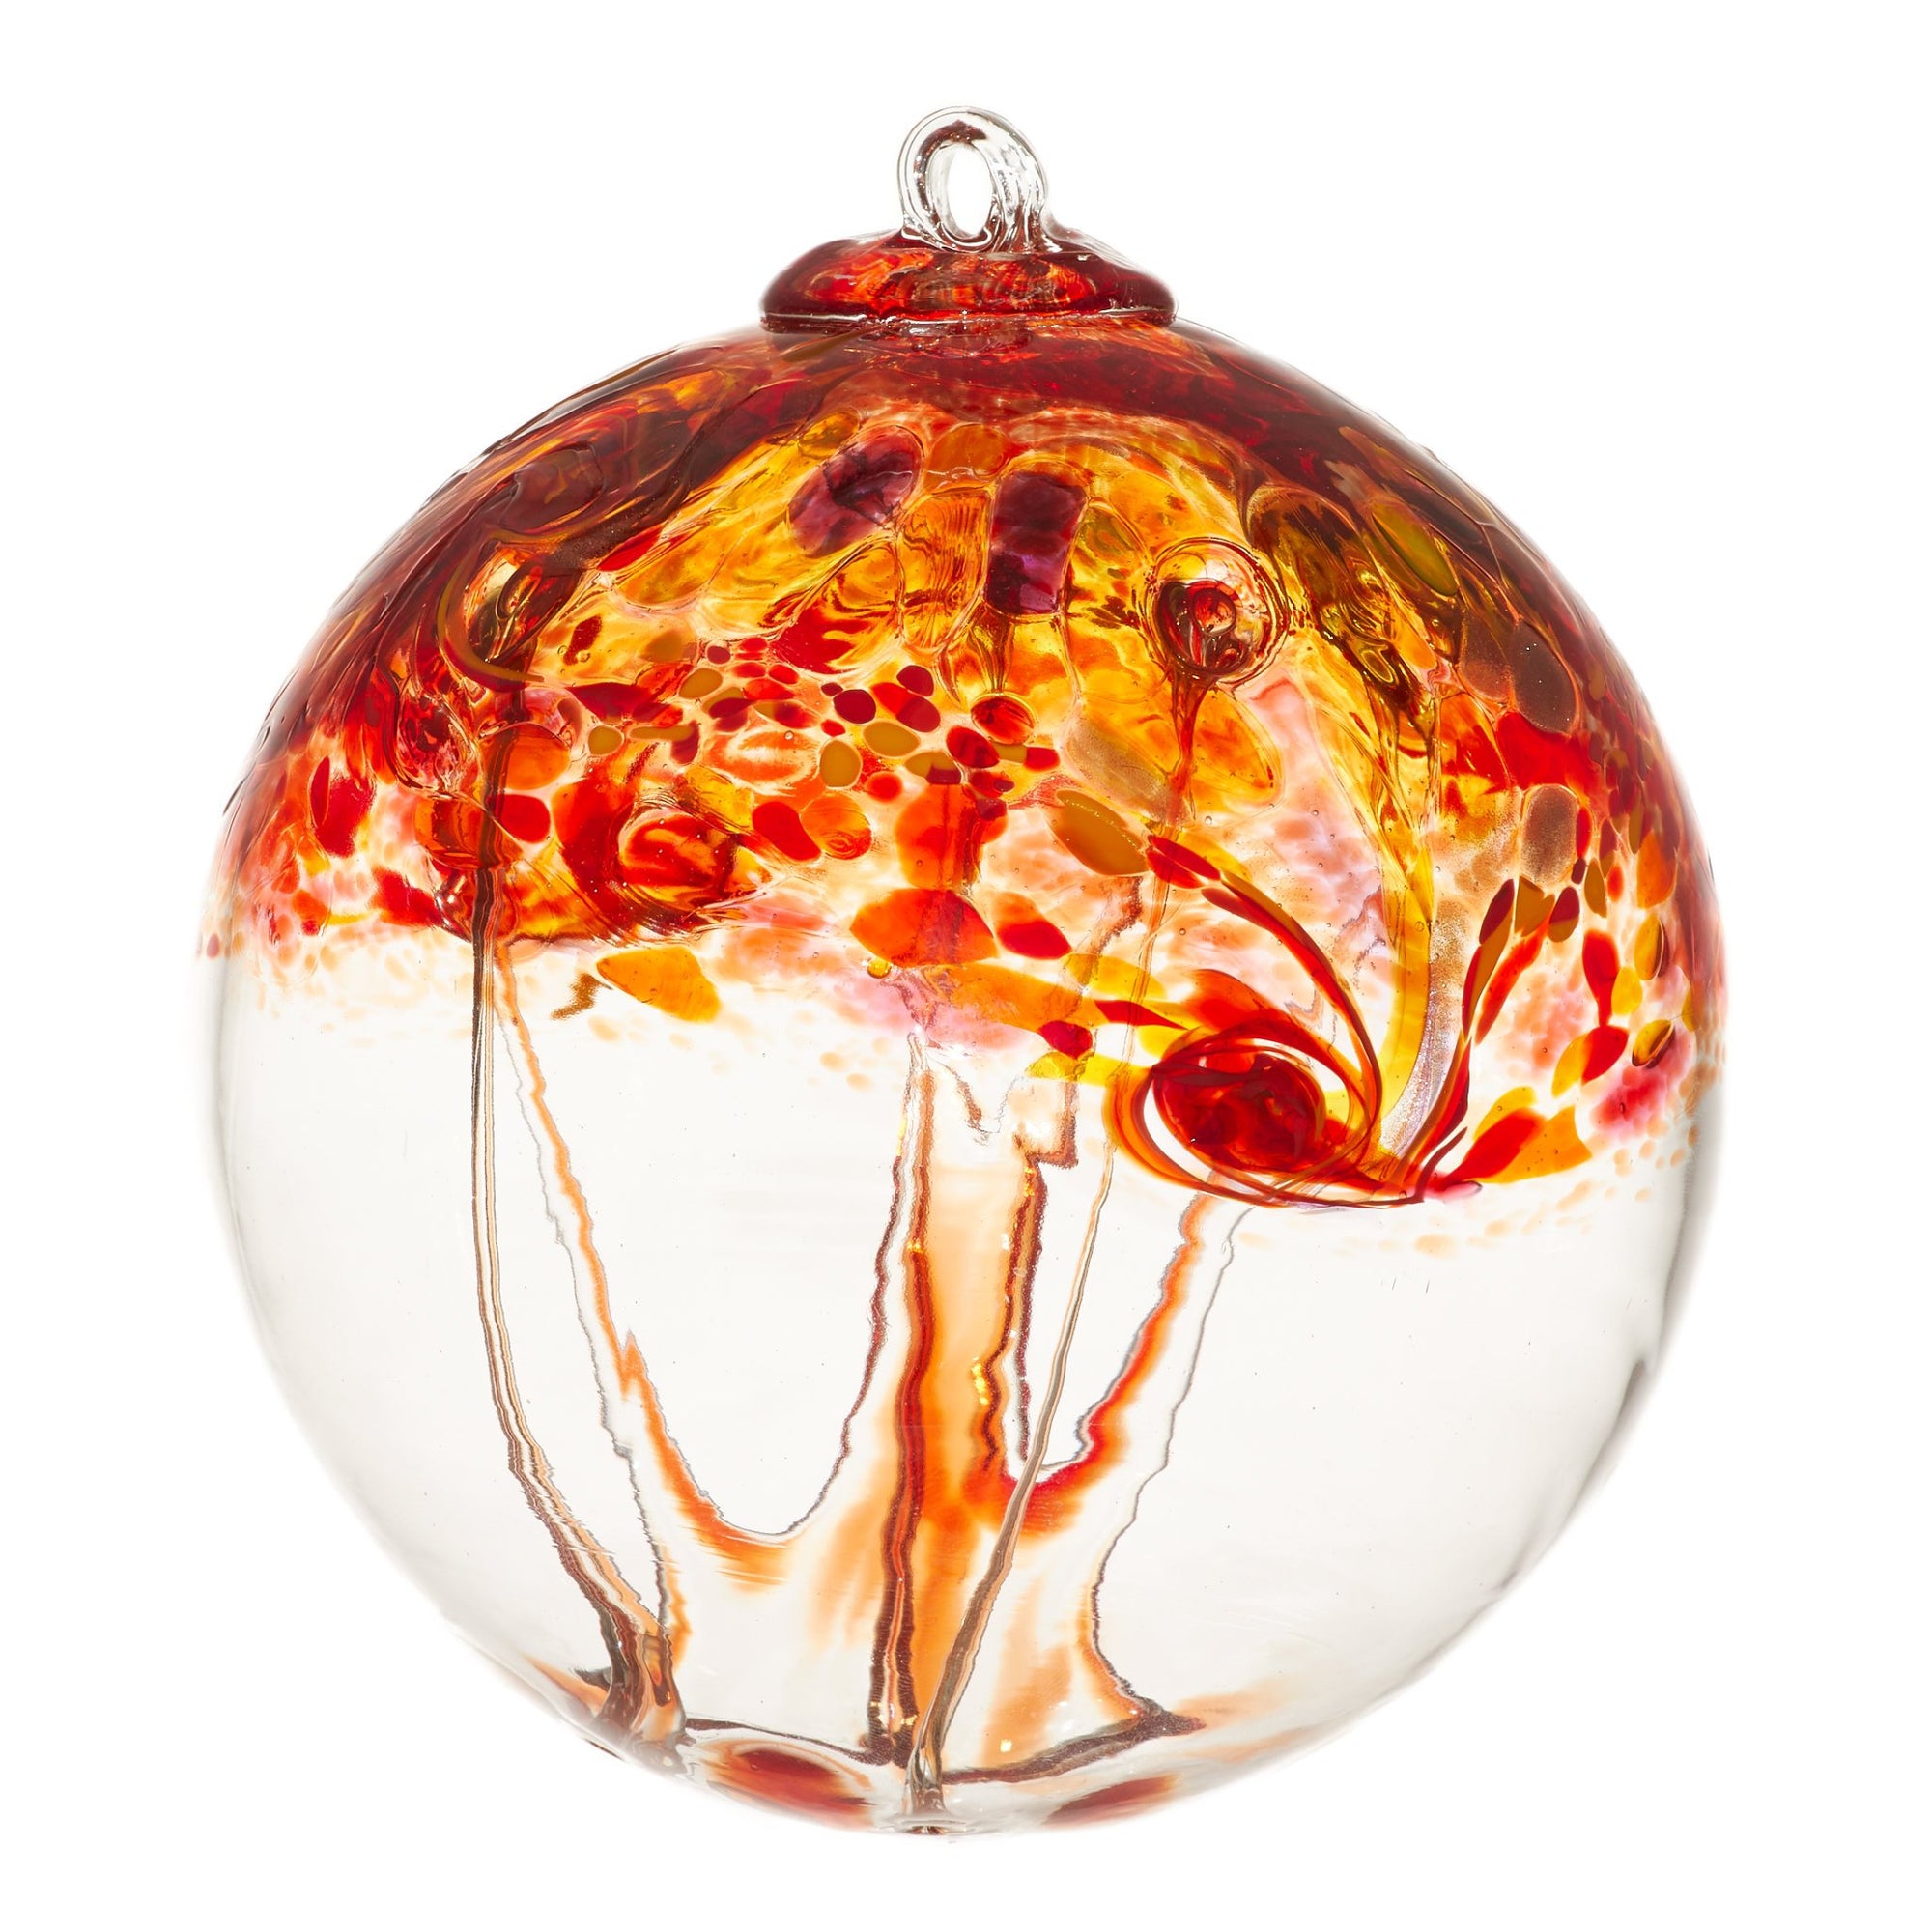 Elements Fire Orb | 6" Hand-blown Art Glass Ornament